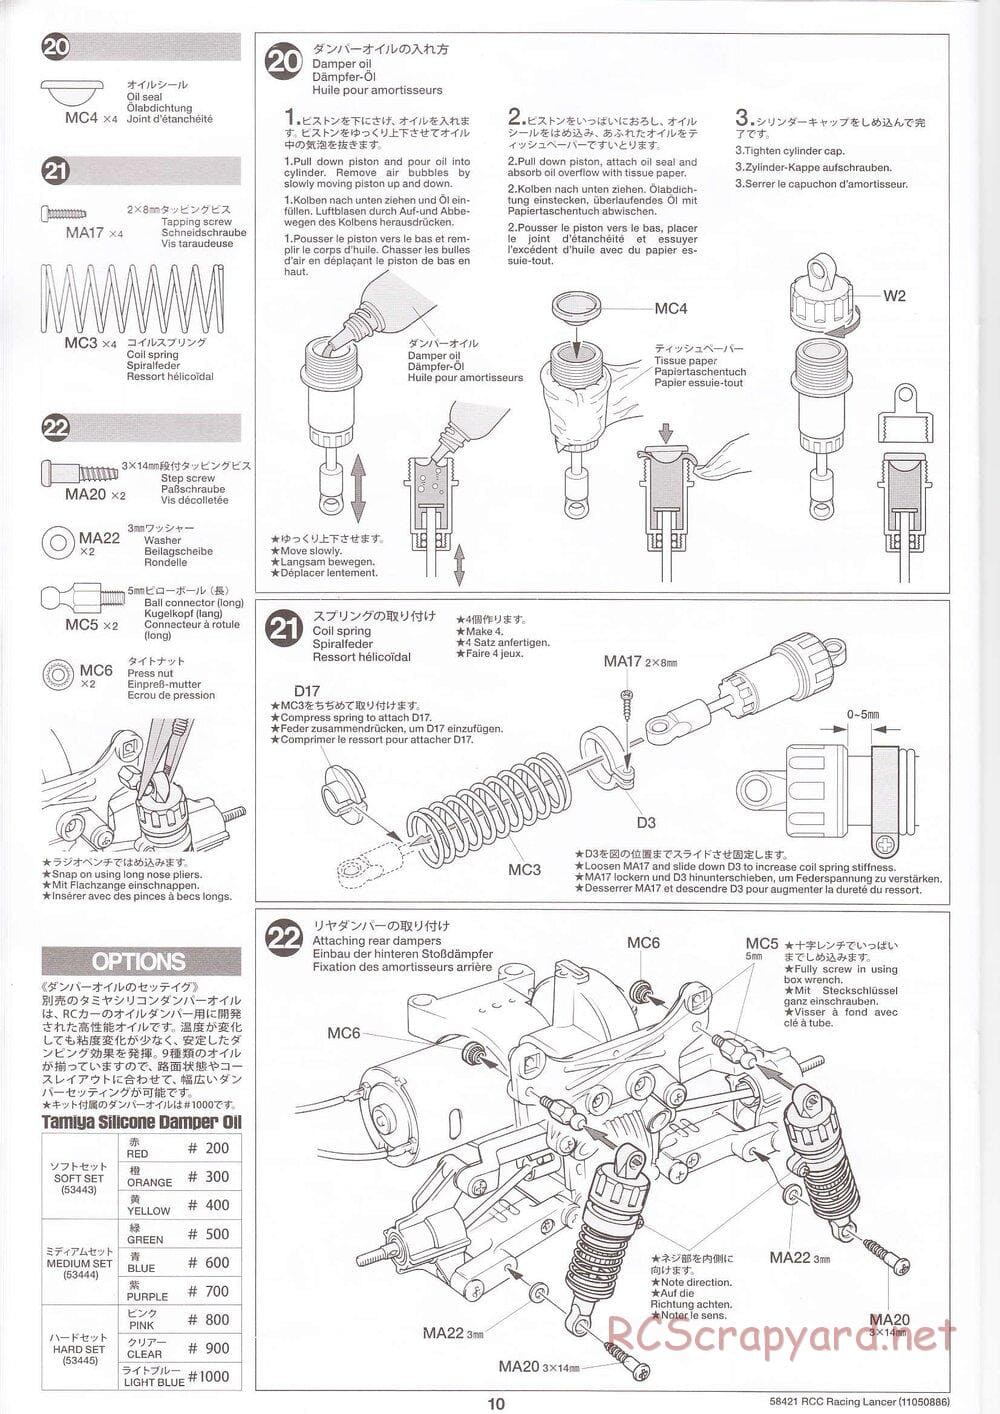 Tamiya - Mitsubishi Racing Lancer - DF-01 Chassis - Manual - Page 10